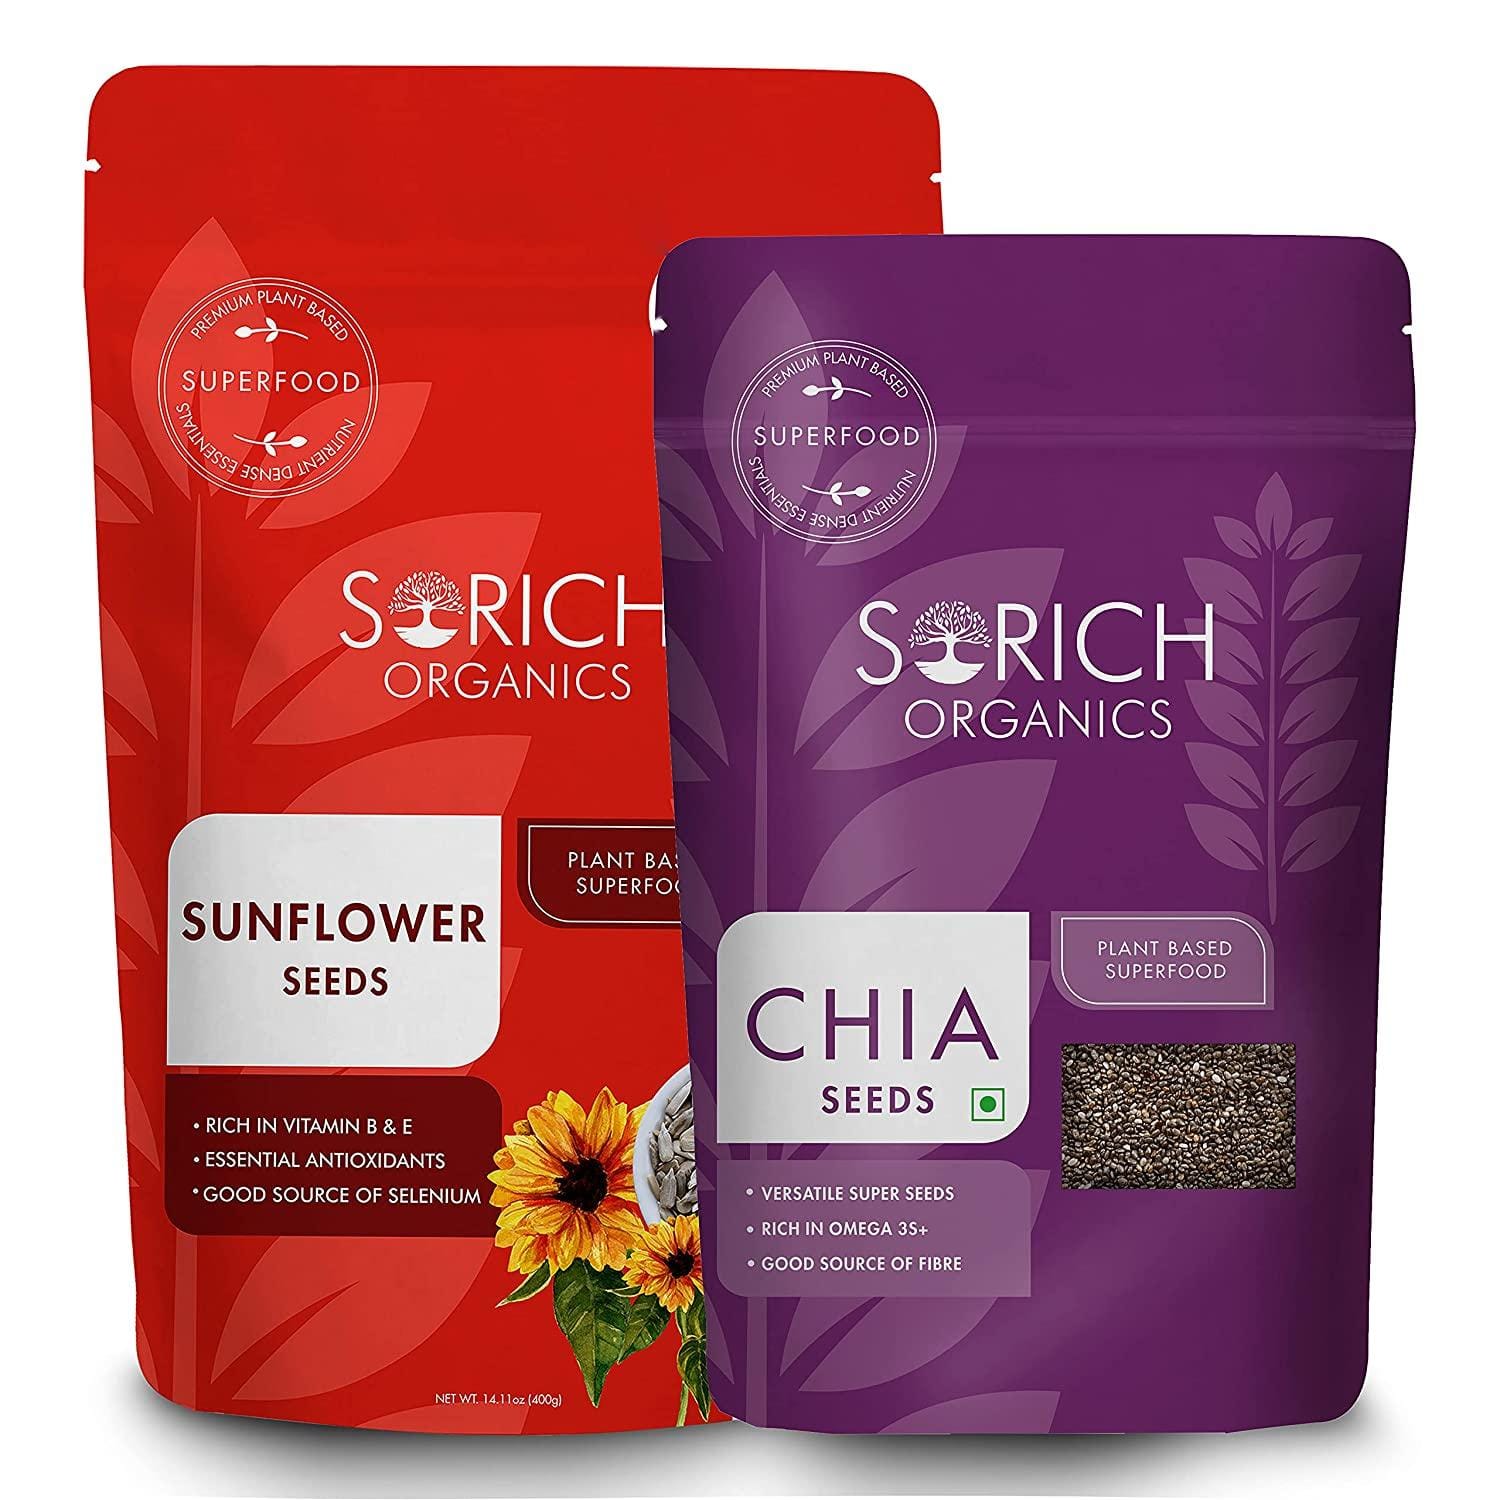 Chia Seeds and sunflower seeds